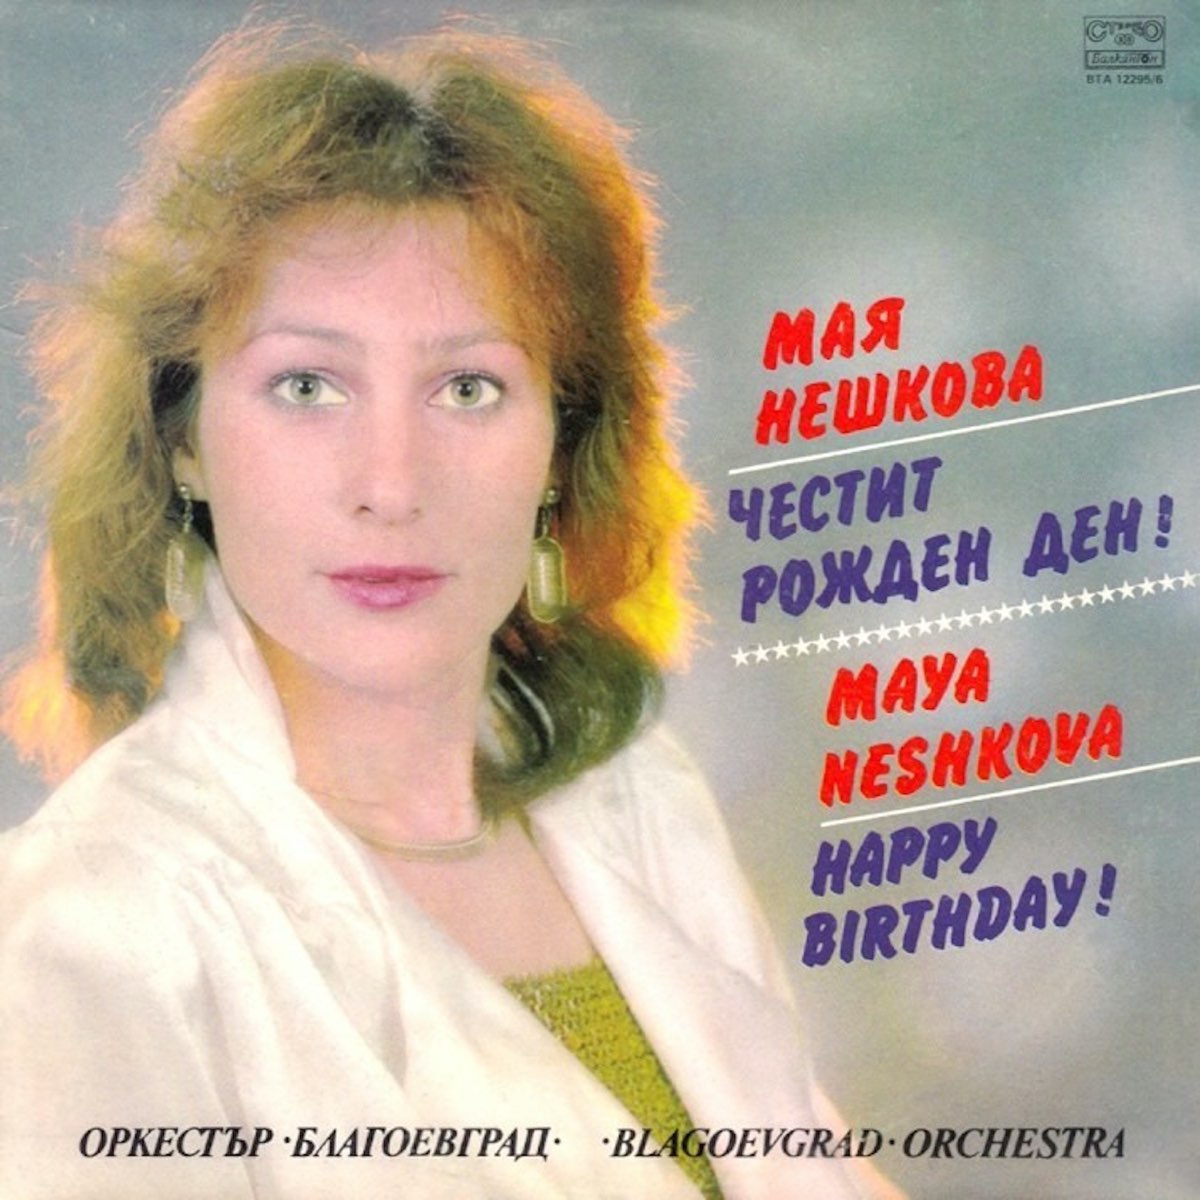 Честит Рожден Ден - Album by Мая Нешкова - Apple Music